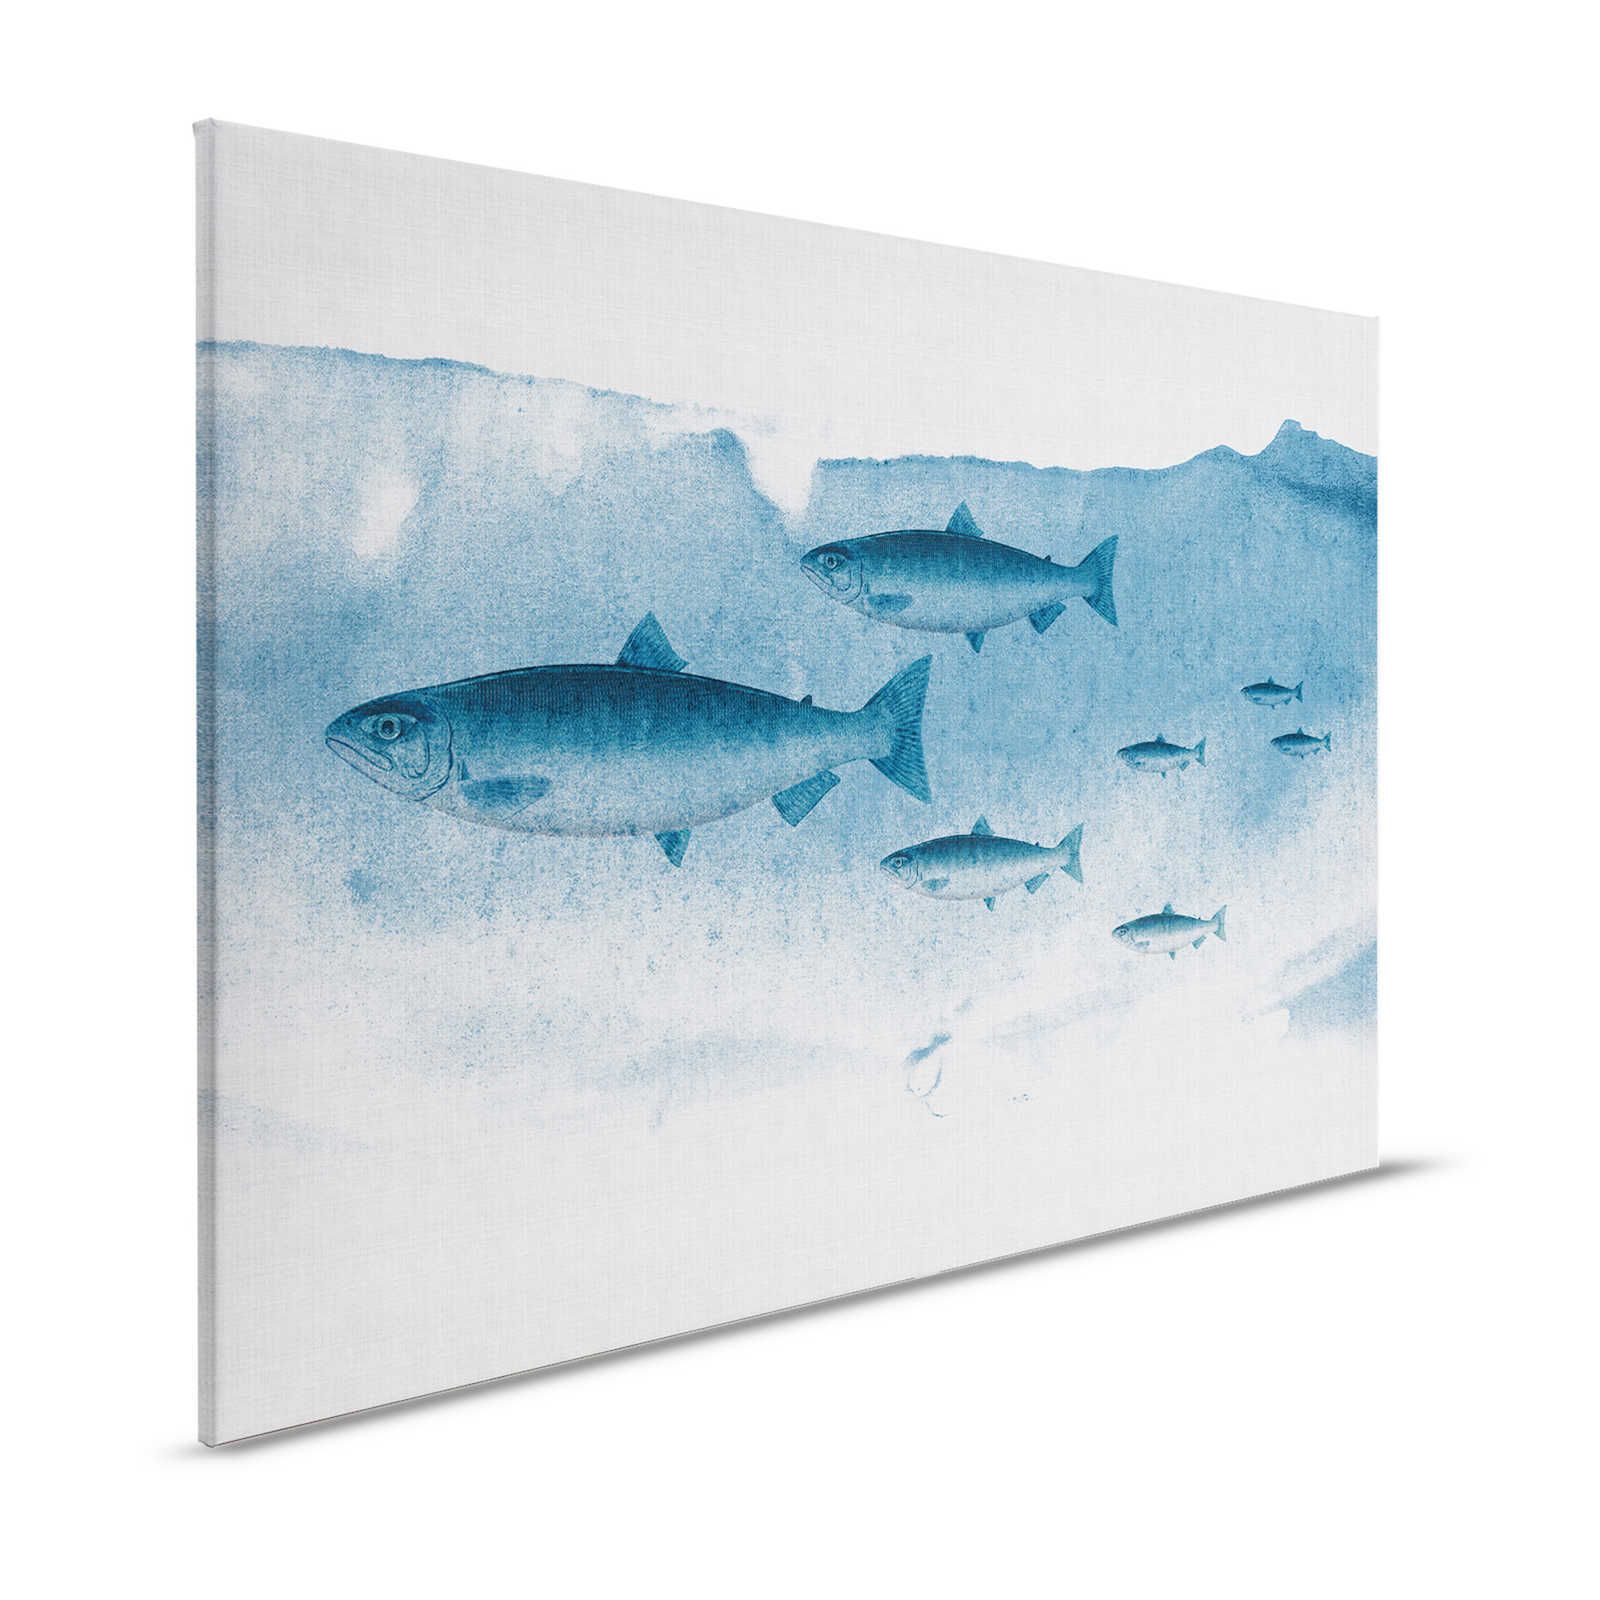 Into the blue 1 - Fisch Aquarell in Blau als Leinwandbild in naturleinen Optik – 1,20 m x 0,80 m
